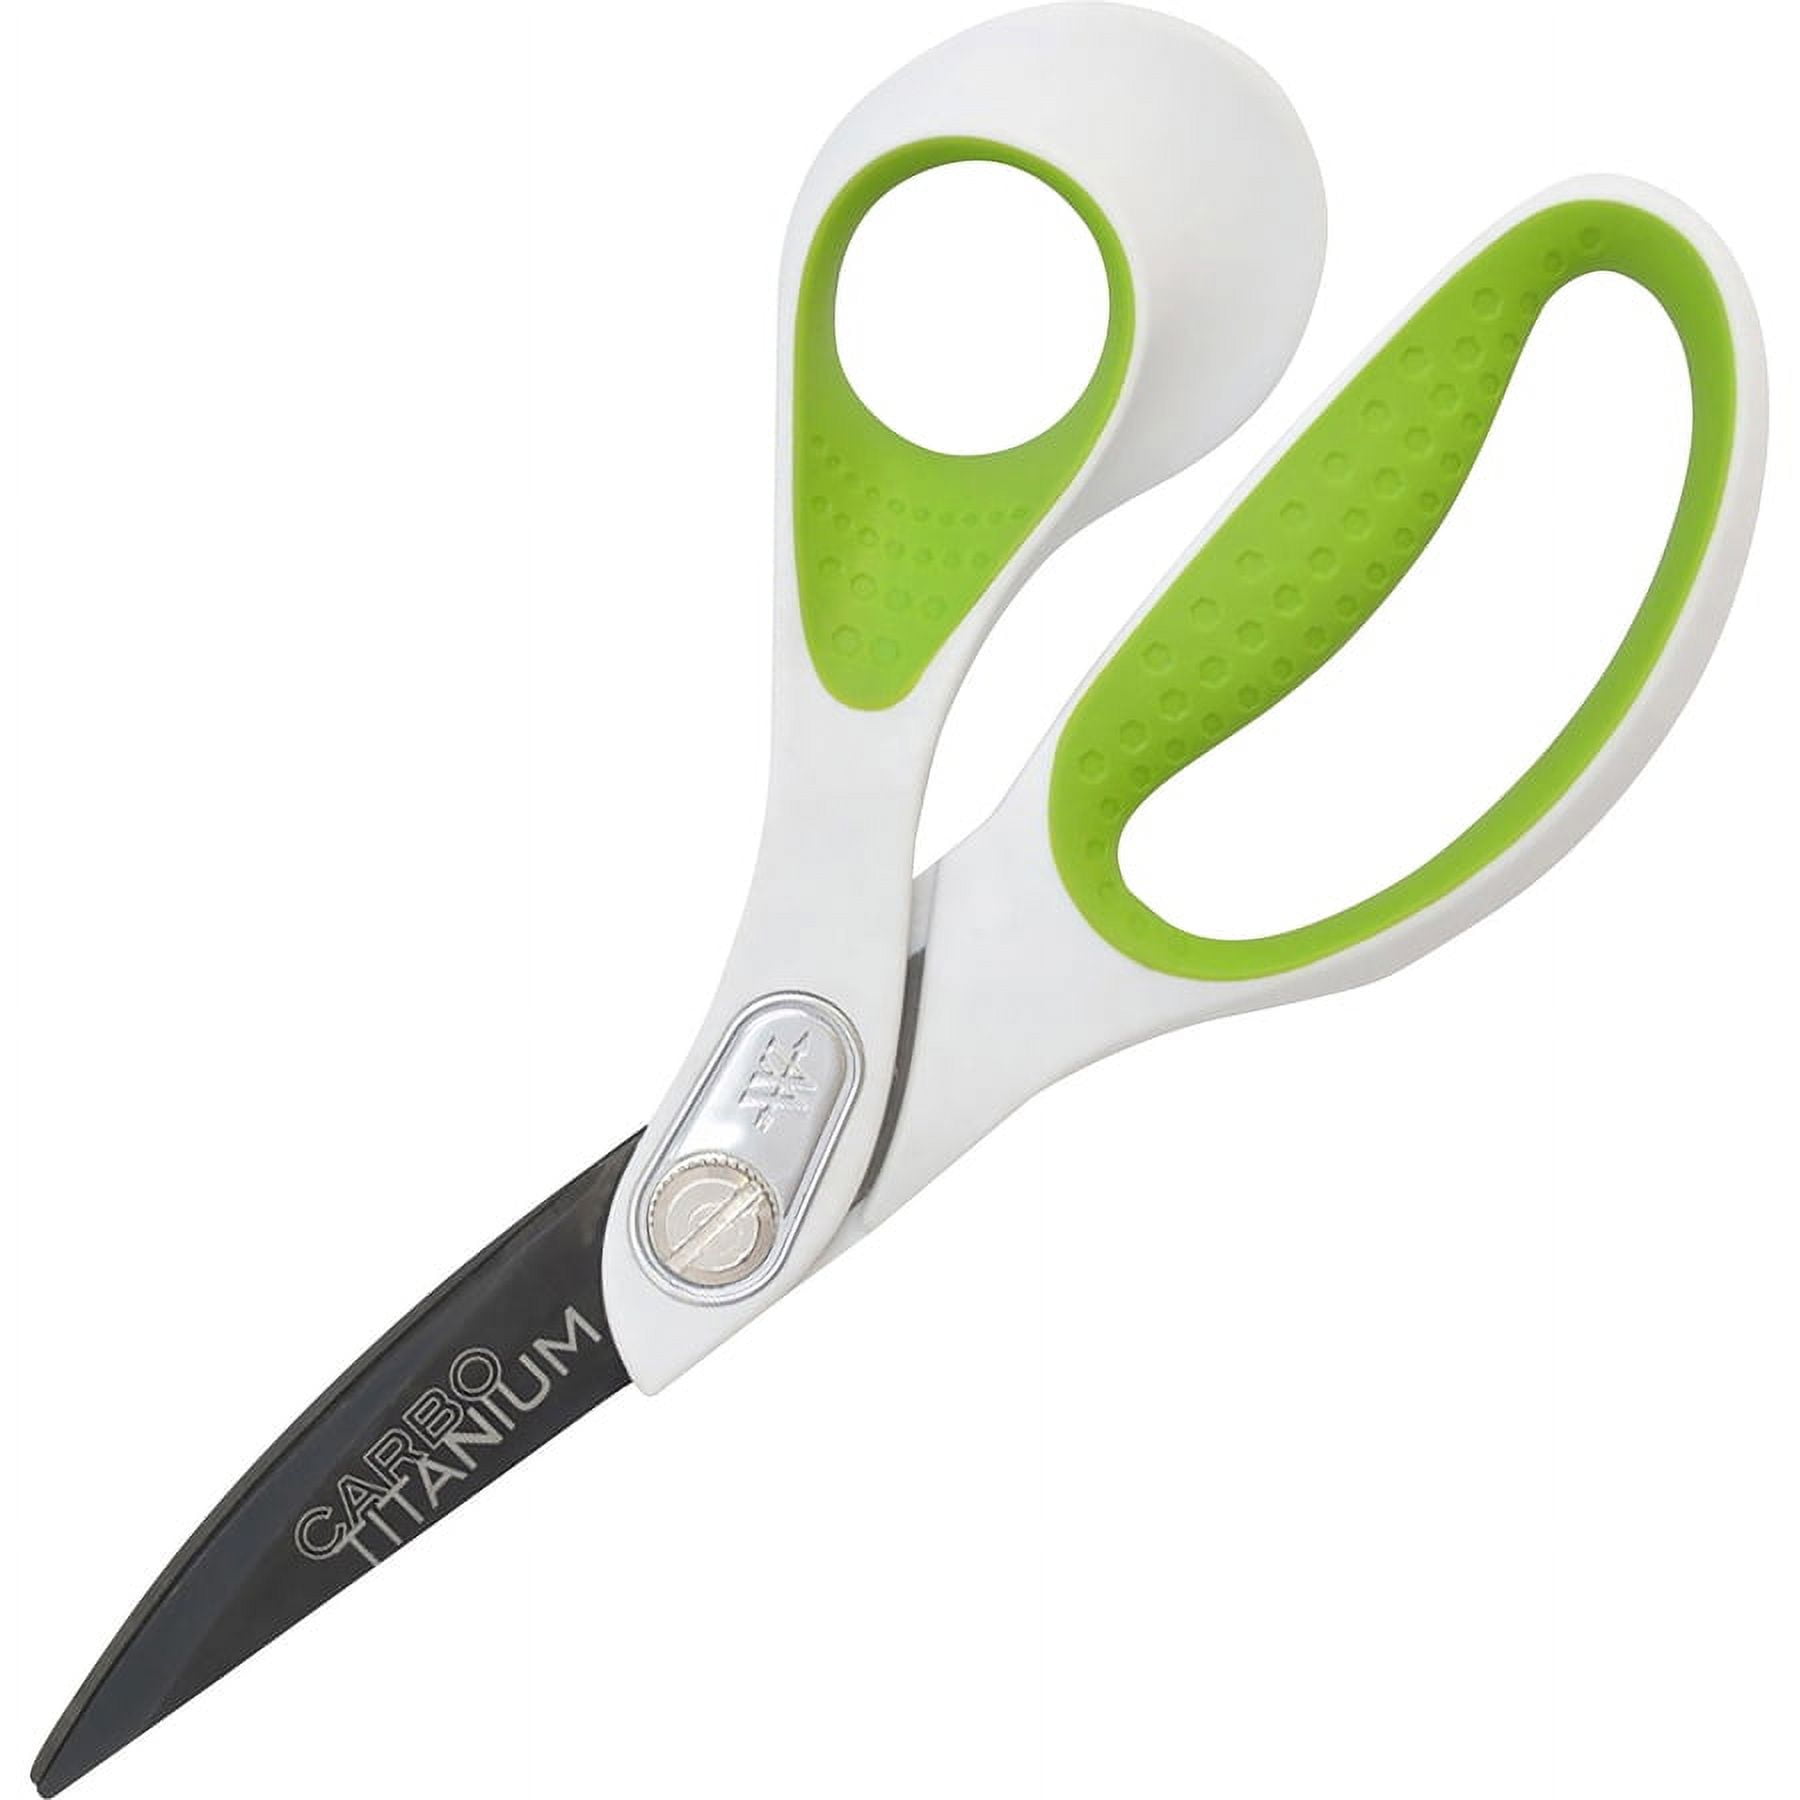 Westcott 8 inch Straight Holidazed Scissors - Green Handle, Stripes